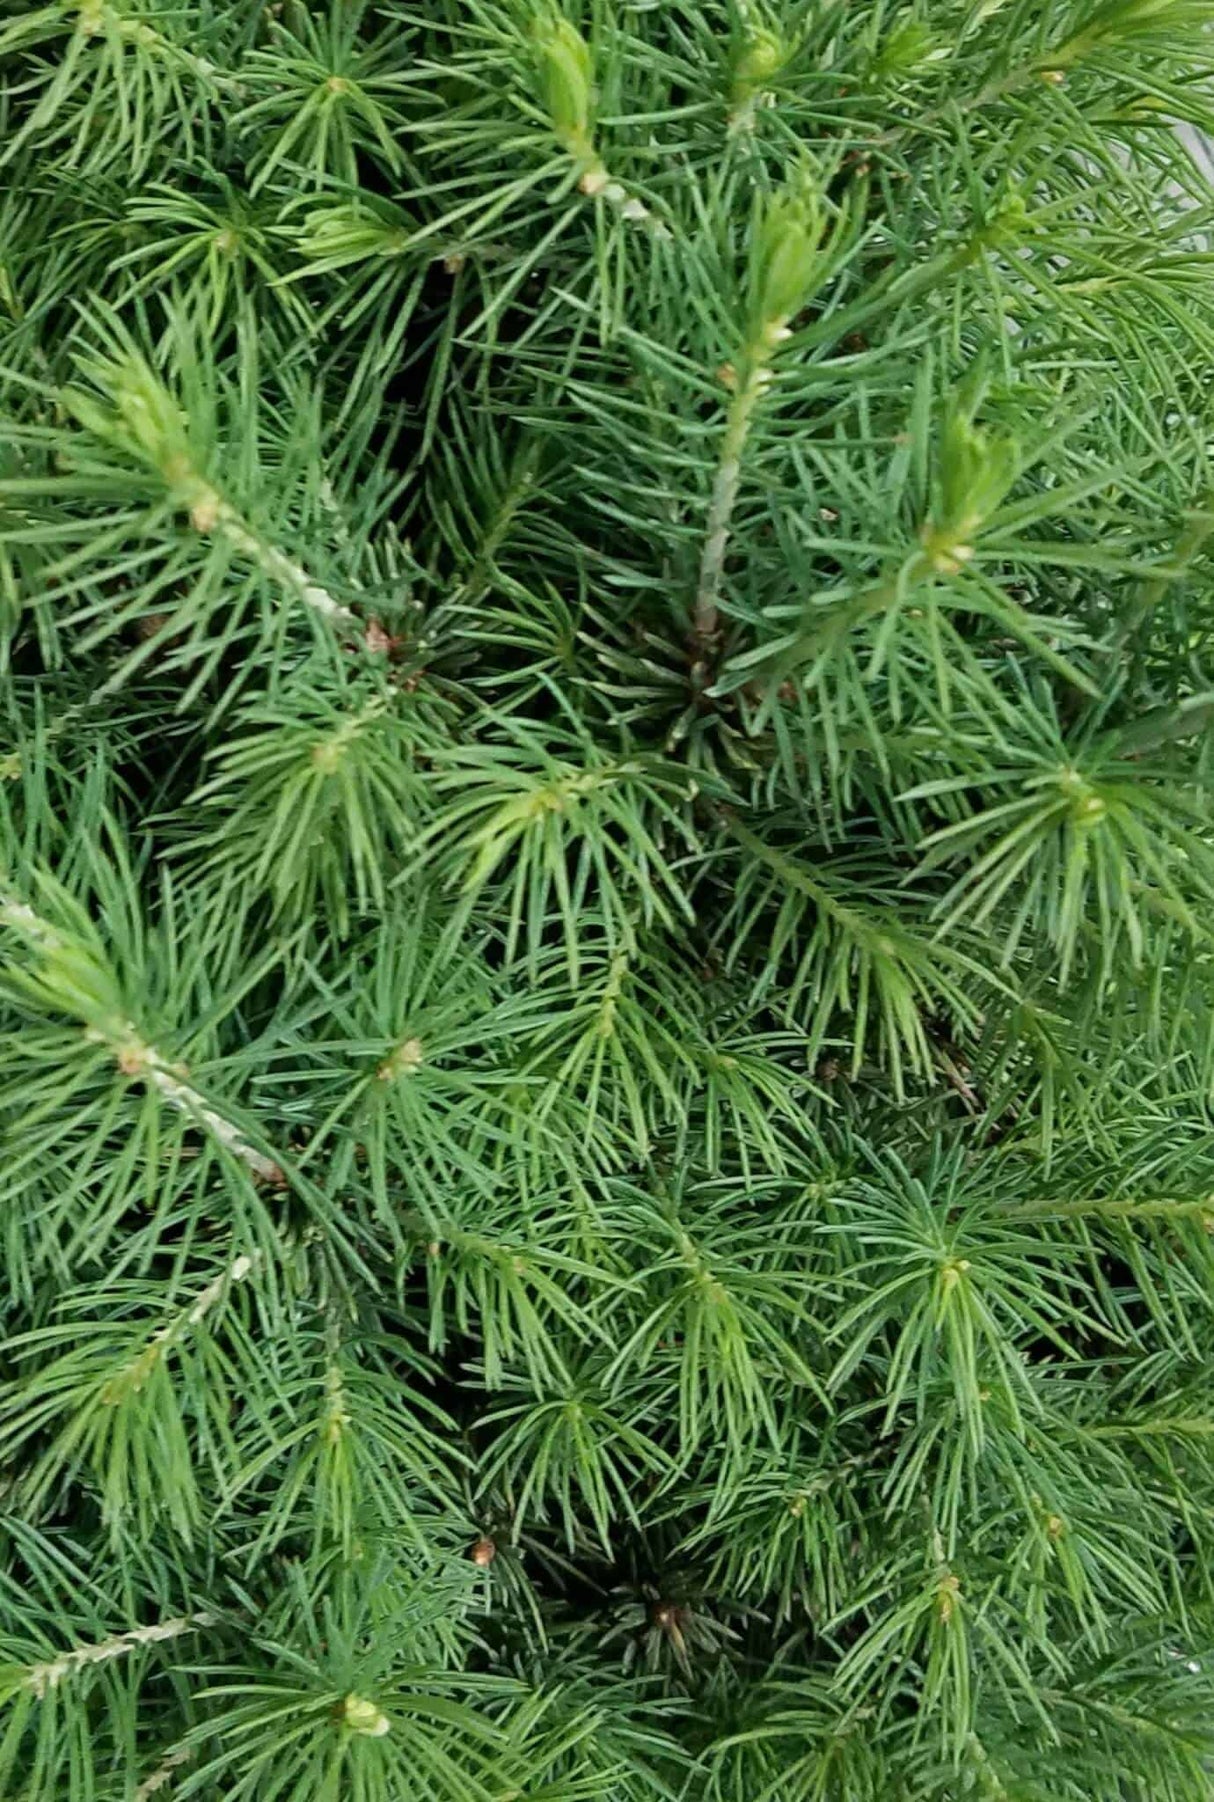 dwarf alberta spruce tree foliage